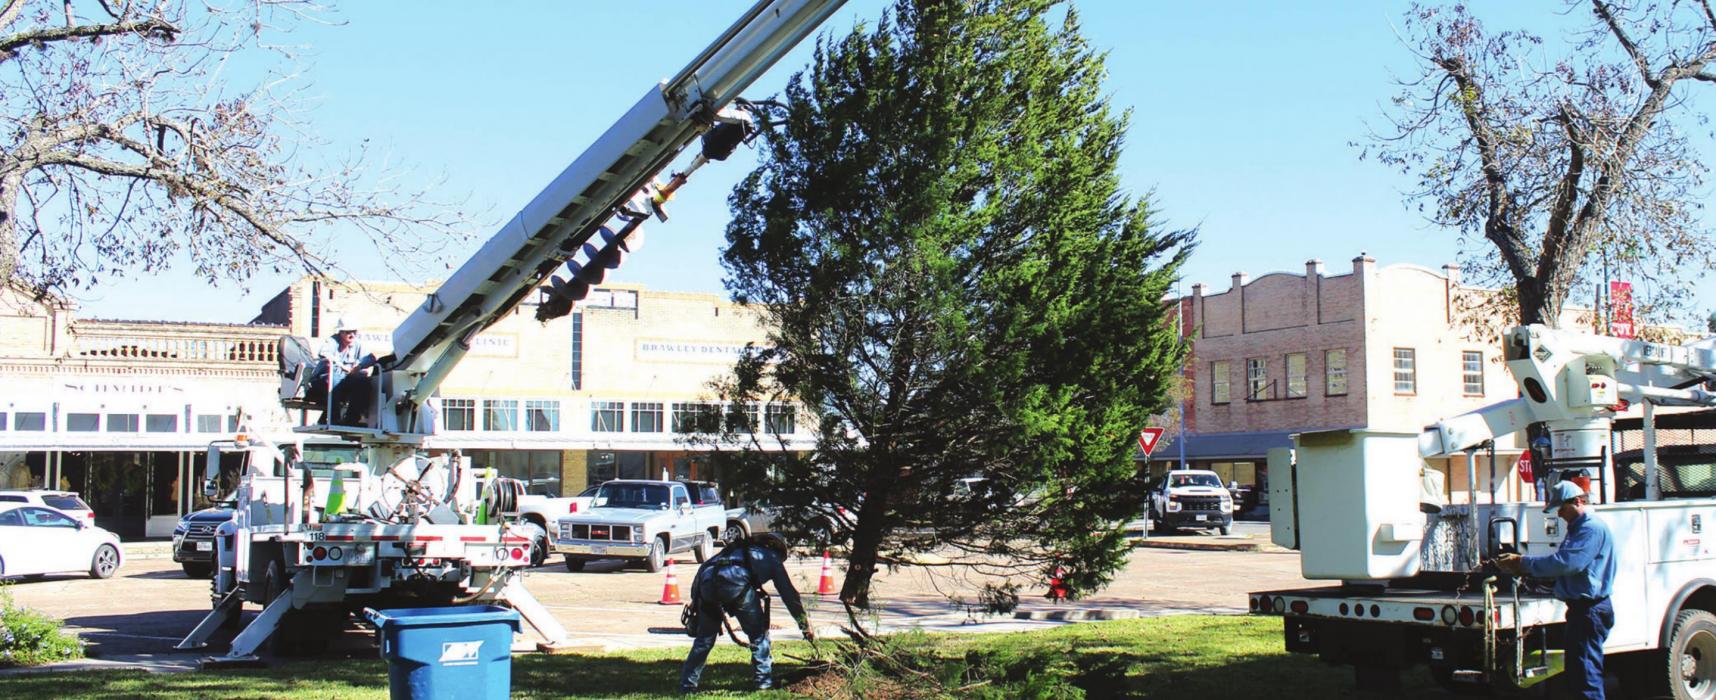 County Christmas Tree Goes Up as Holiday Season Hits Full S